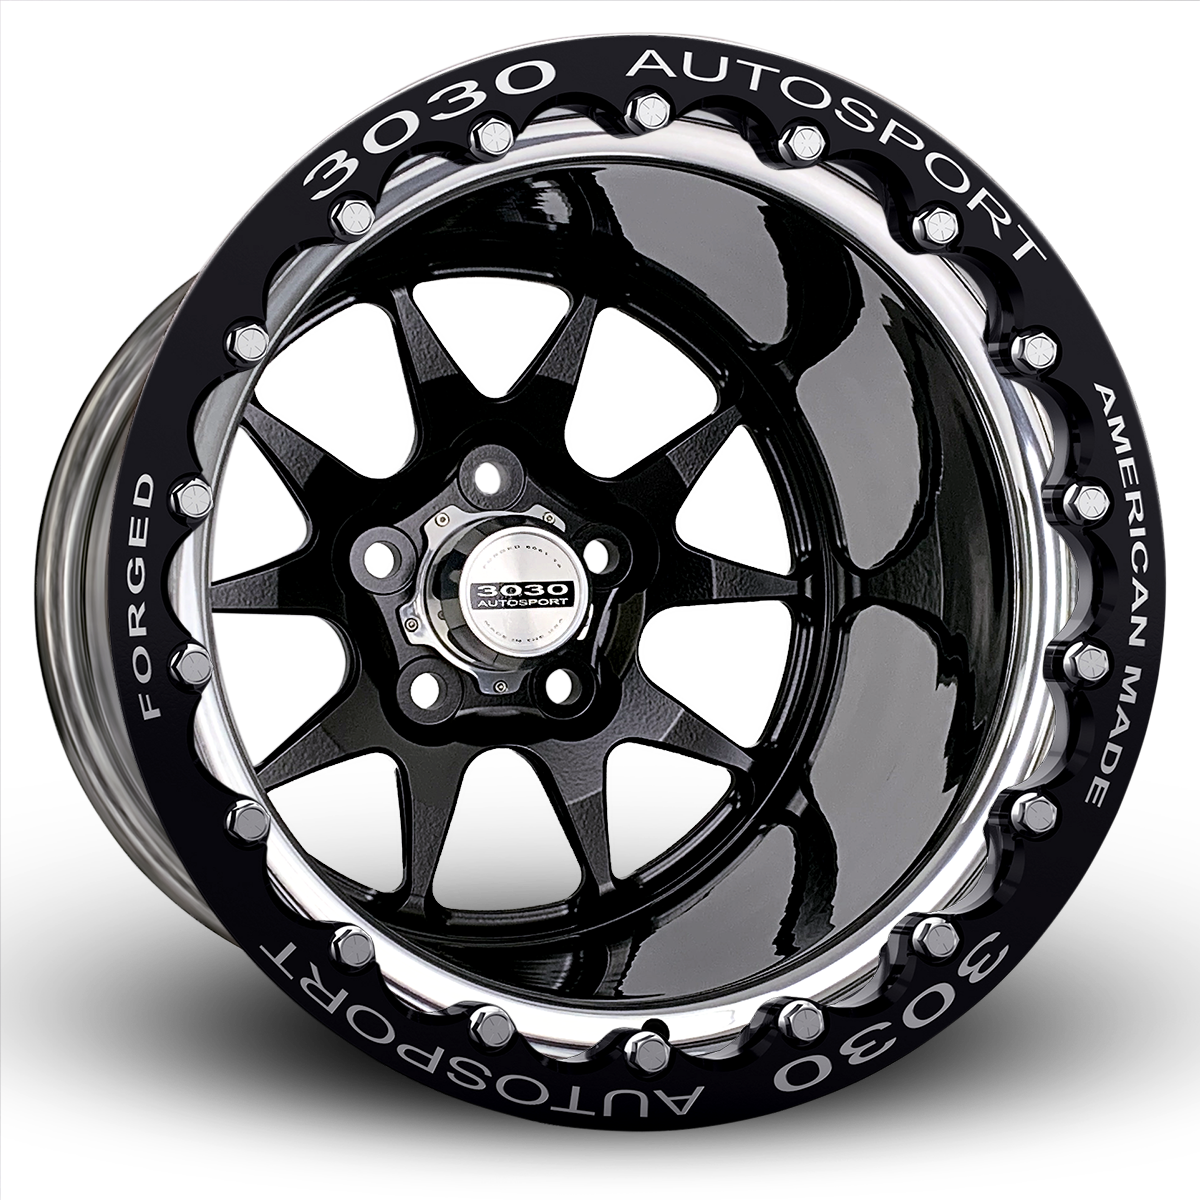 MACH-10 Double-Beadlock Wheel, Size: 15x14", Bolt Pattern: 5x4.75", Backspace: 4" [Black/Polished]